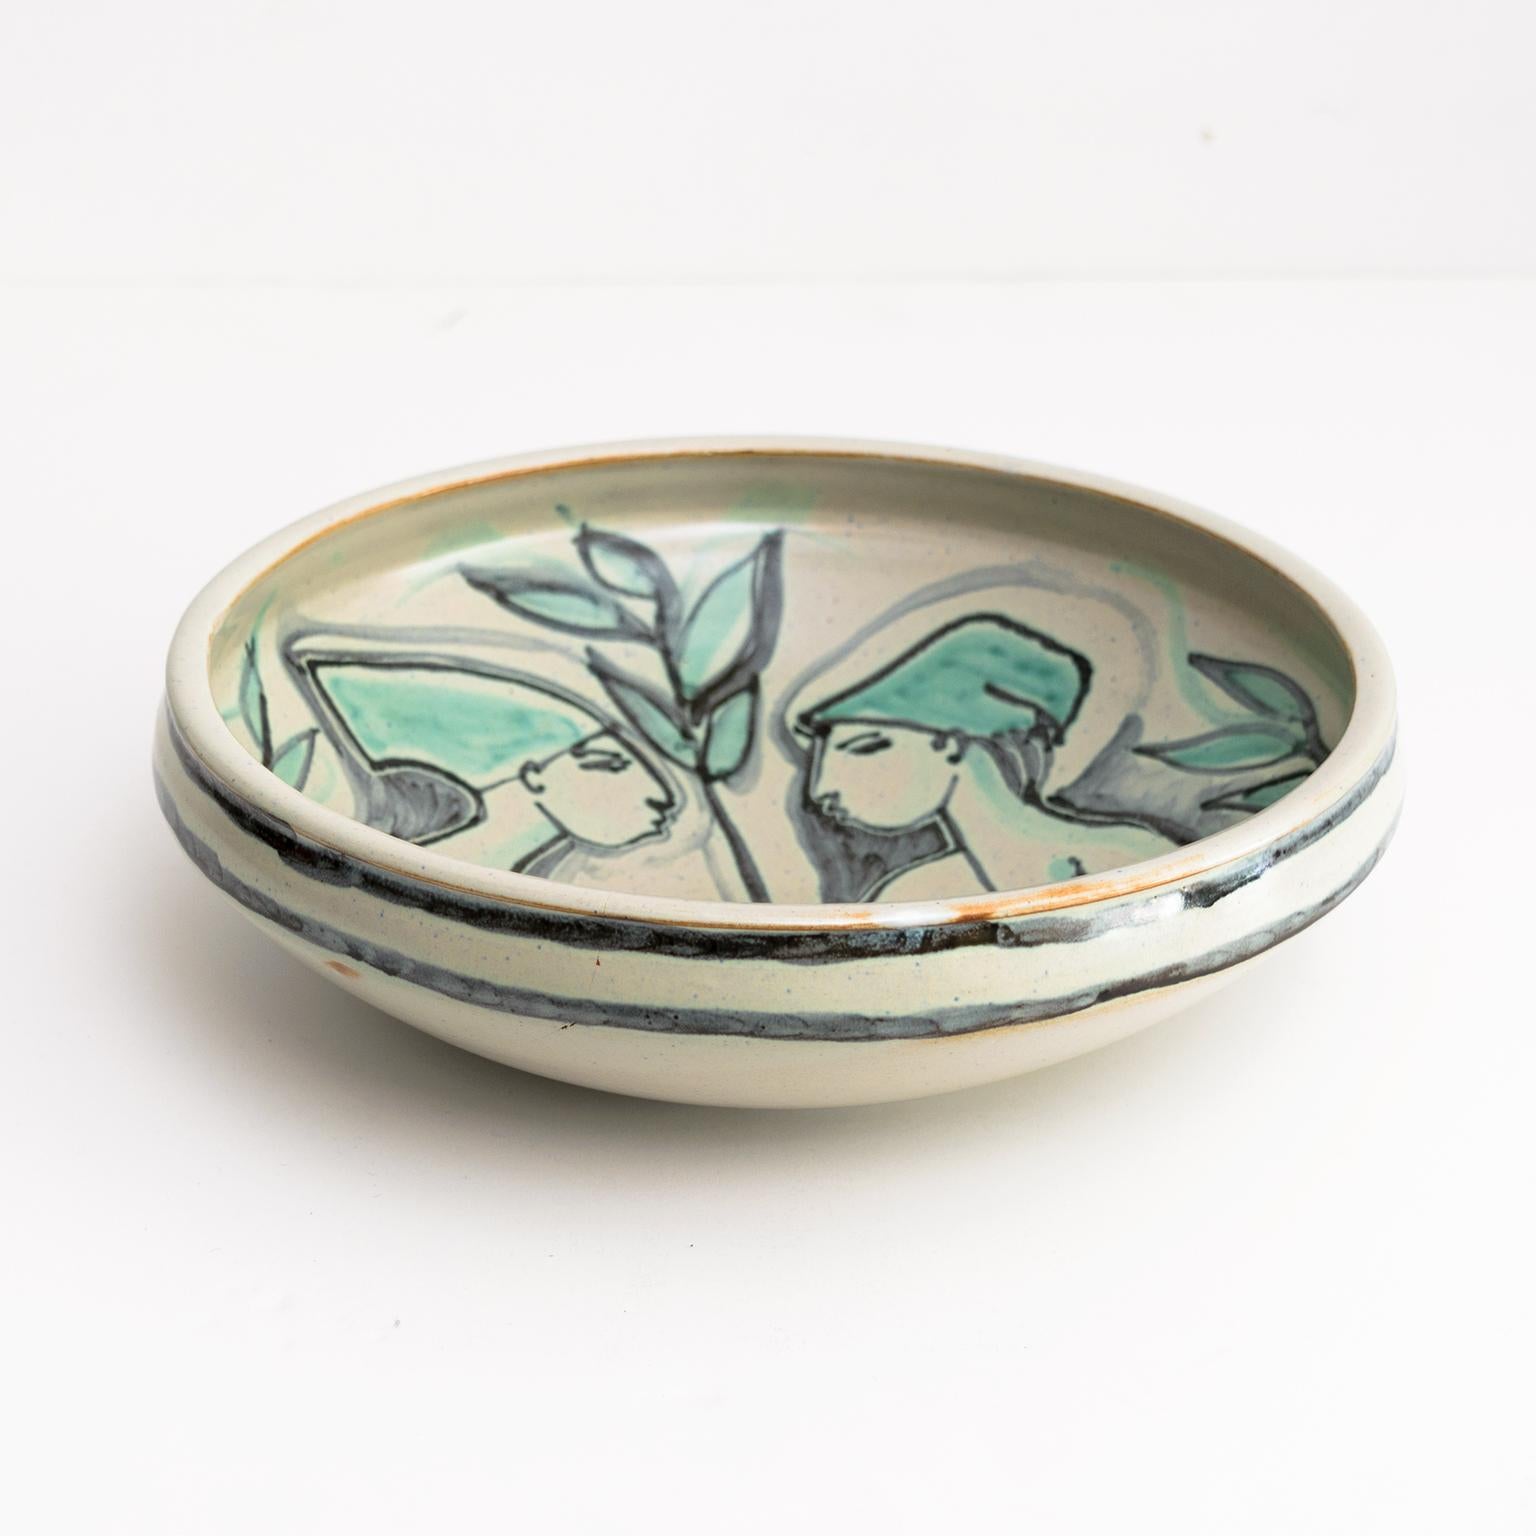 Scandinavian Modern Mette Doller Designed Bowl with Seated Women, Höganäs Keramik, Sweden, 1950's For Sale